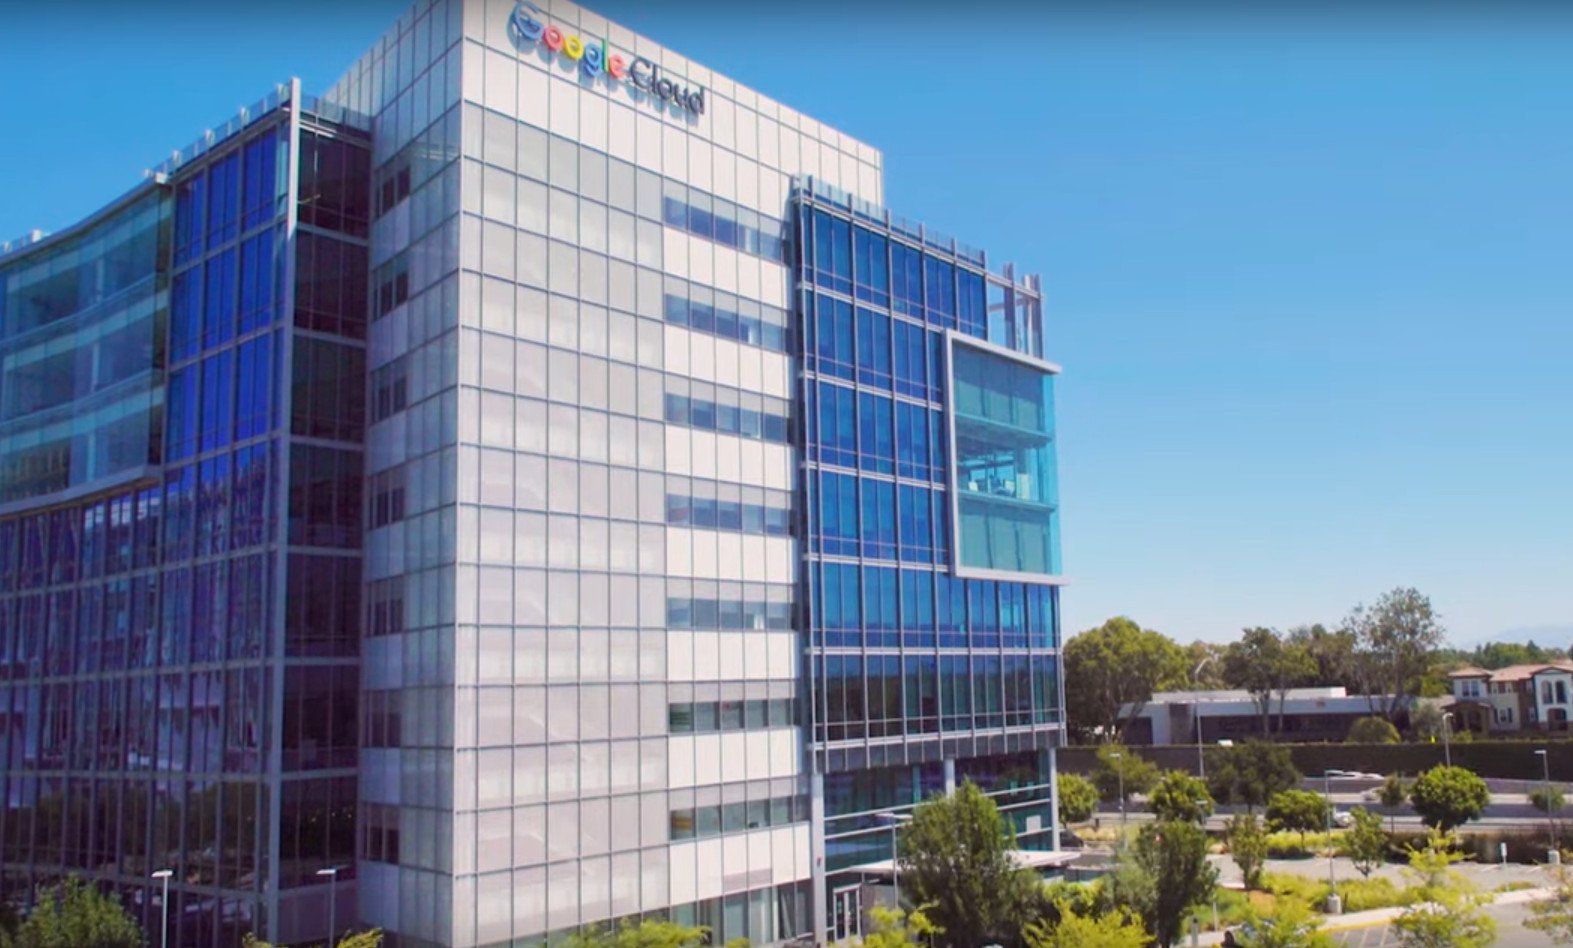 Google Cloud Office Building